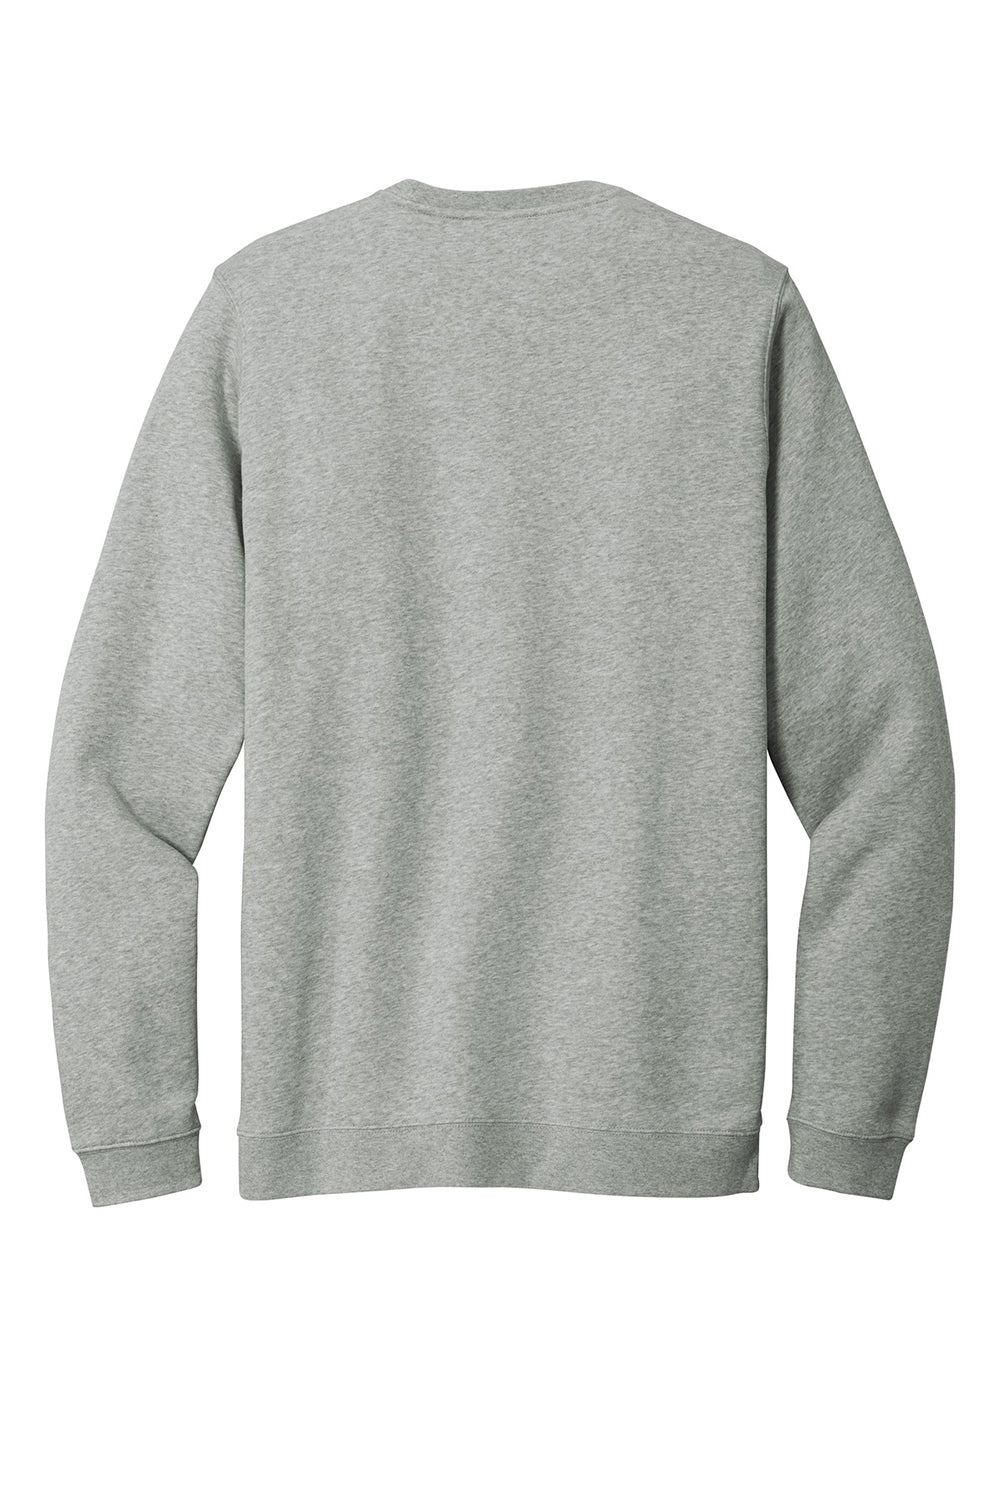 Nike CJ1614 Mens Club Fleece Crewneck Sweatshirt Heather Dark Grey Flat Back